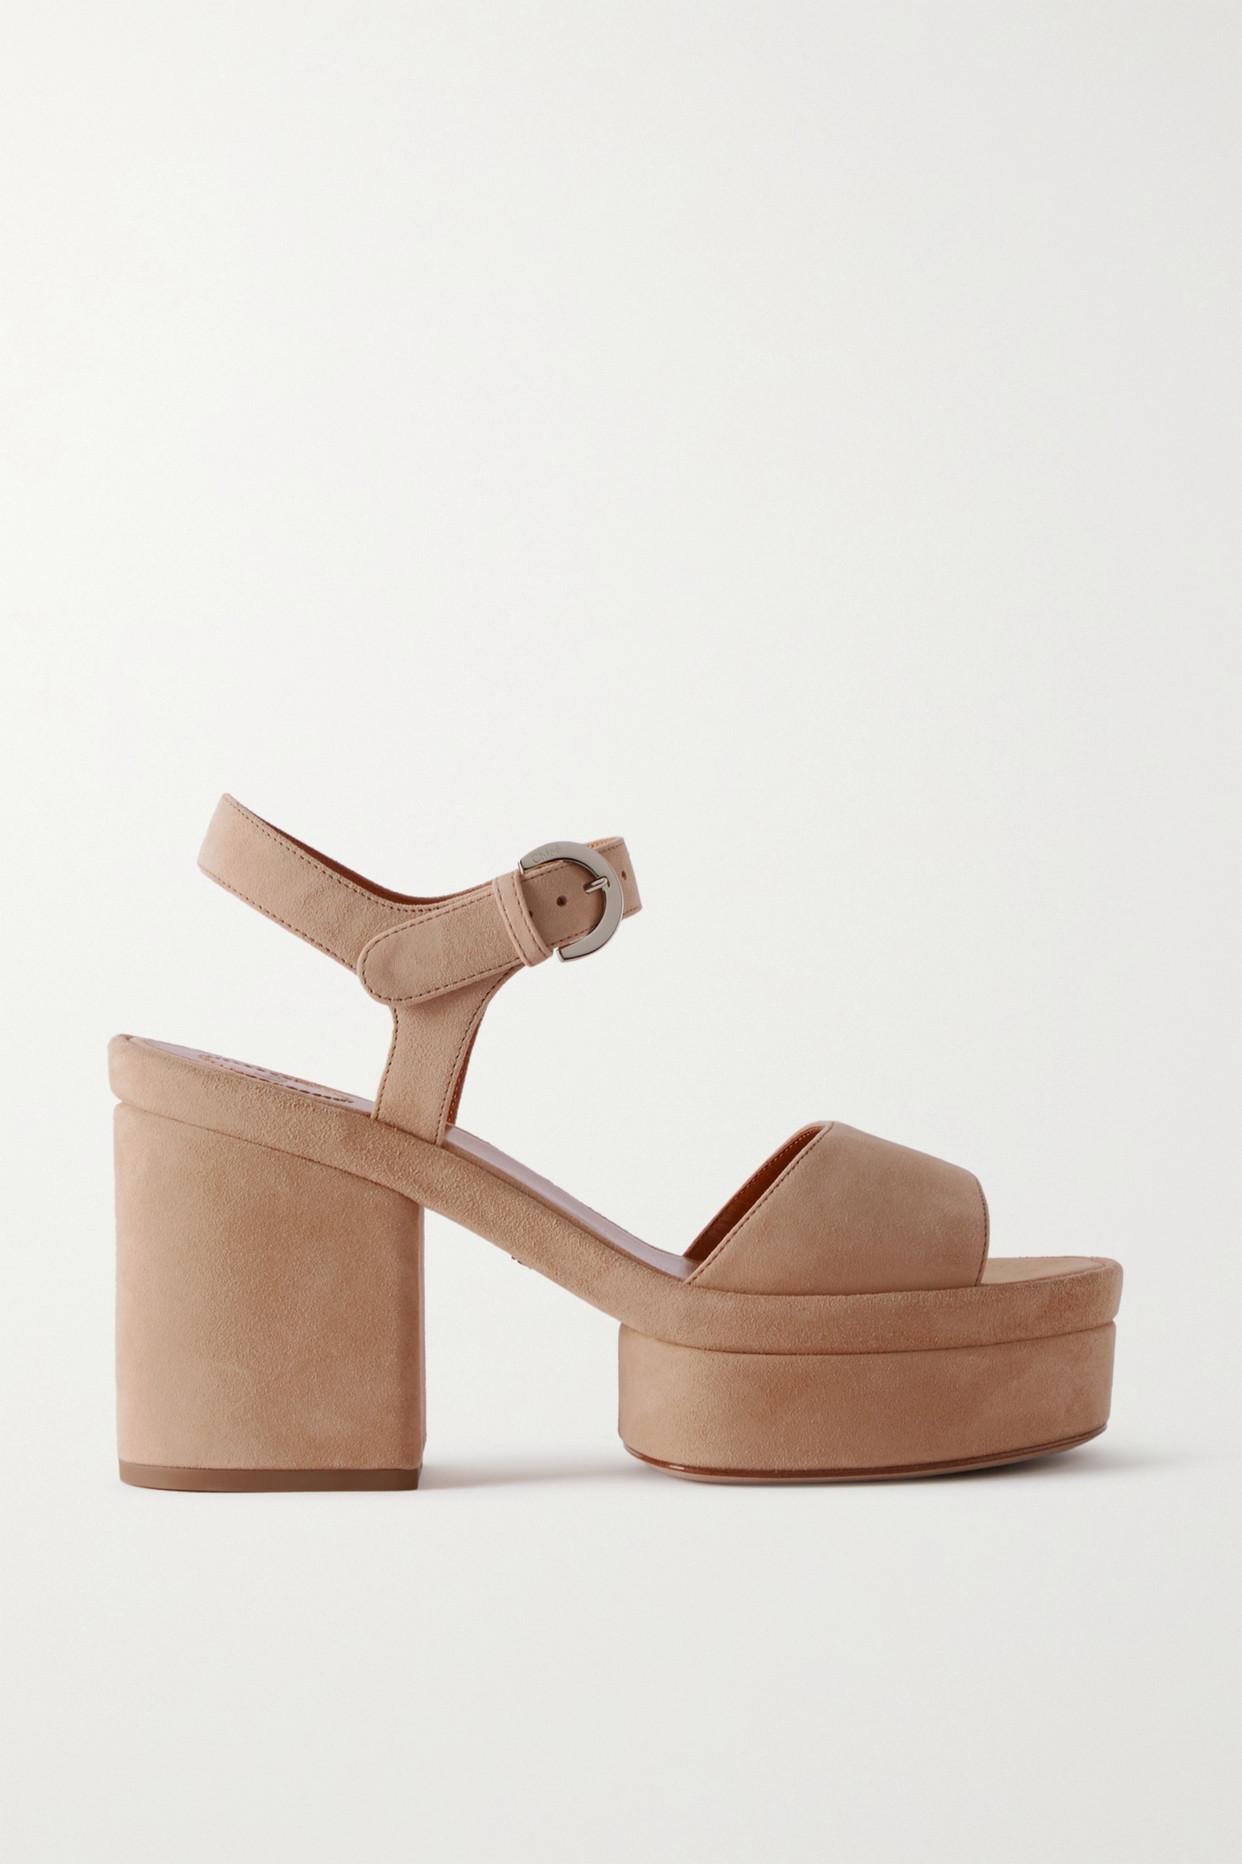 Chloé Odina Suede Platform Sandals in Natural | Lyst